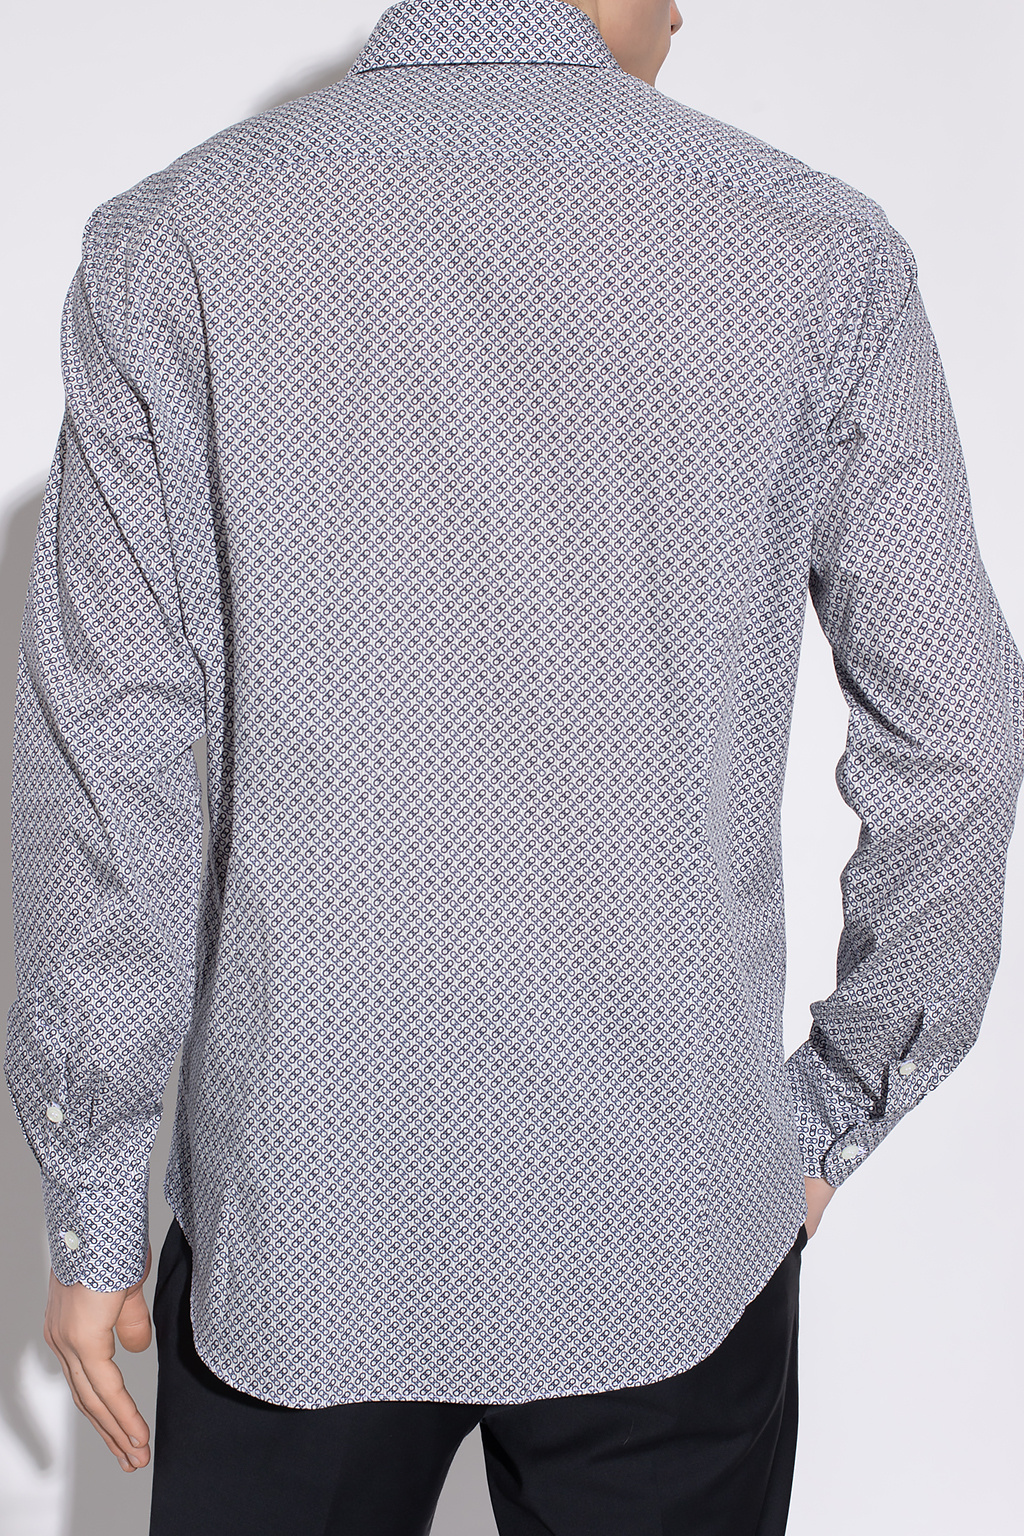 Salvatore Ferragamo Cotton shirt with ‘Gancini’ pattern